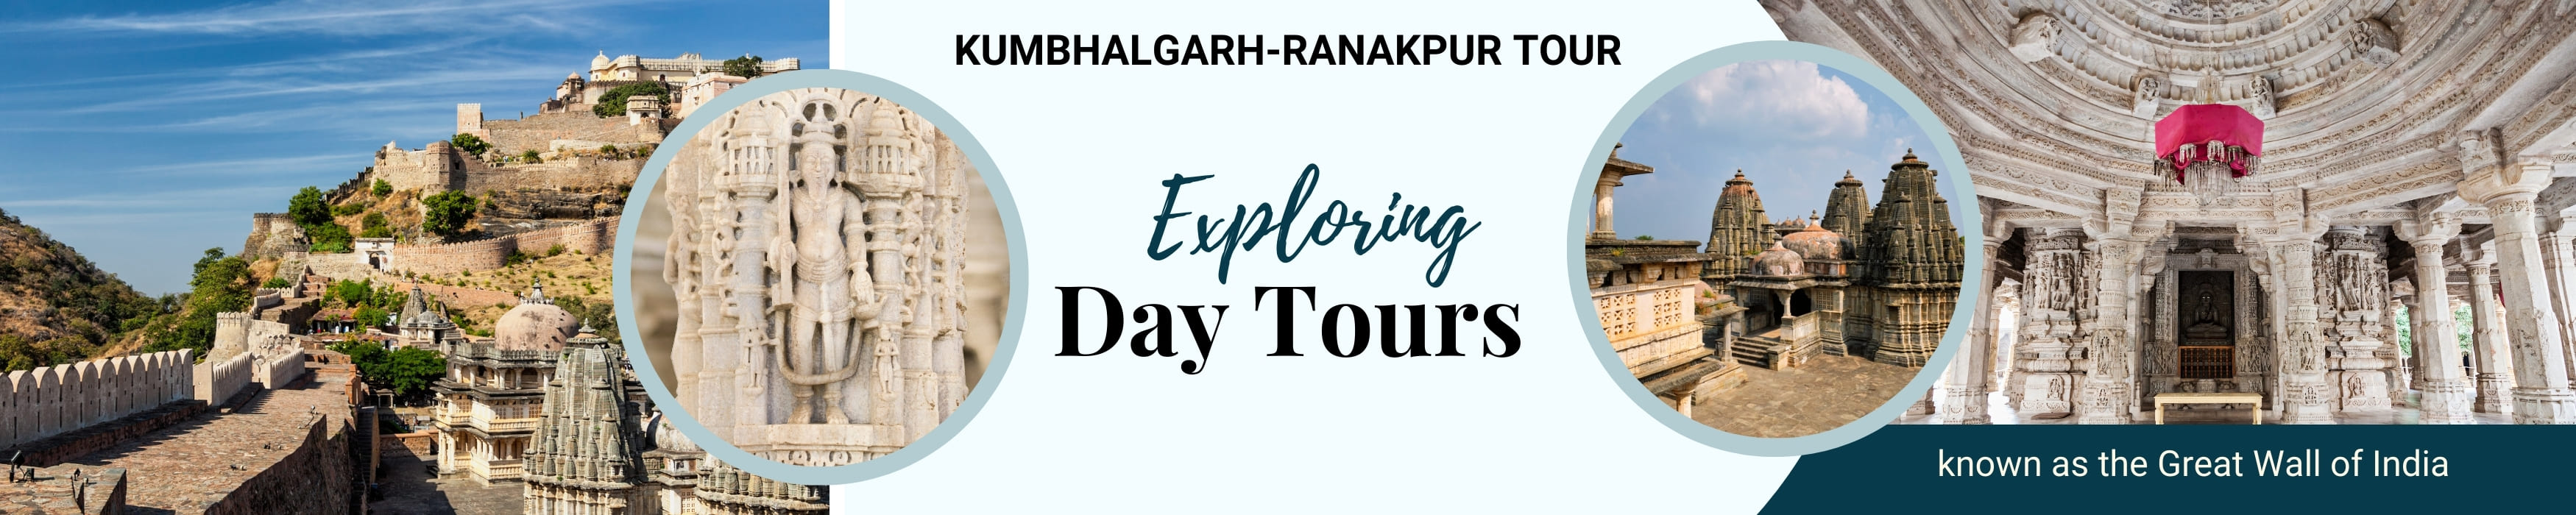 Kumbhalgarh-Ranakpur Tour